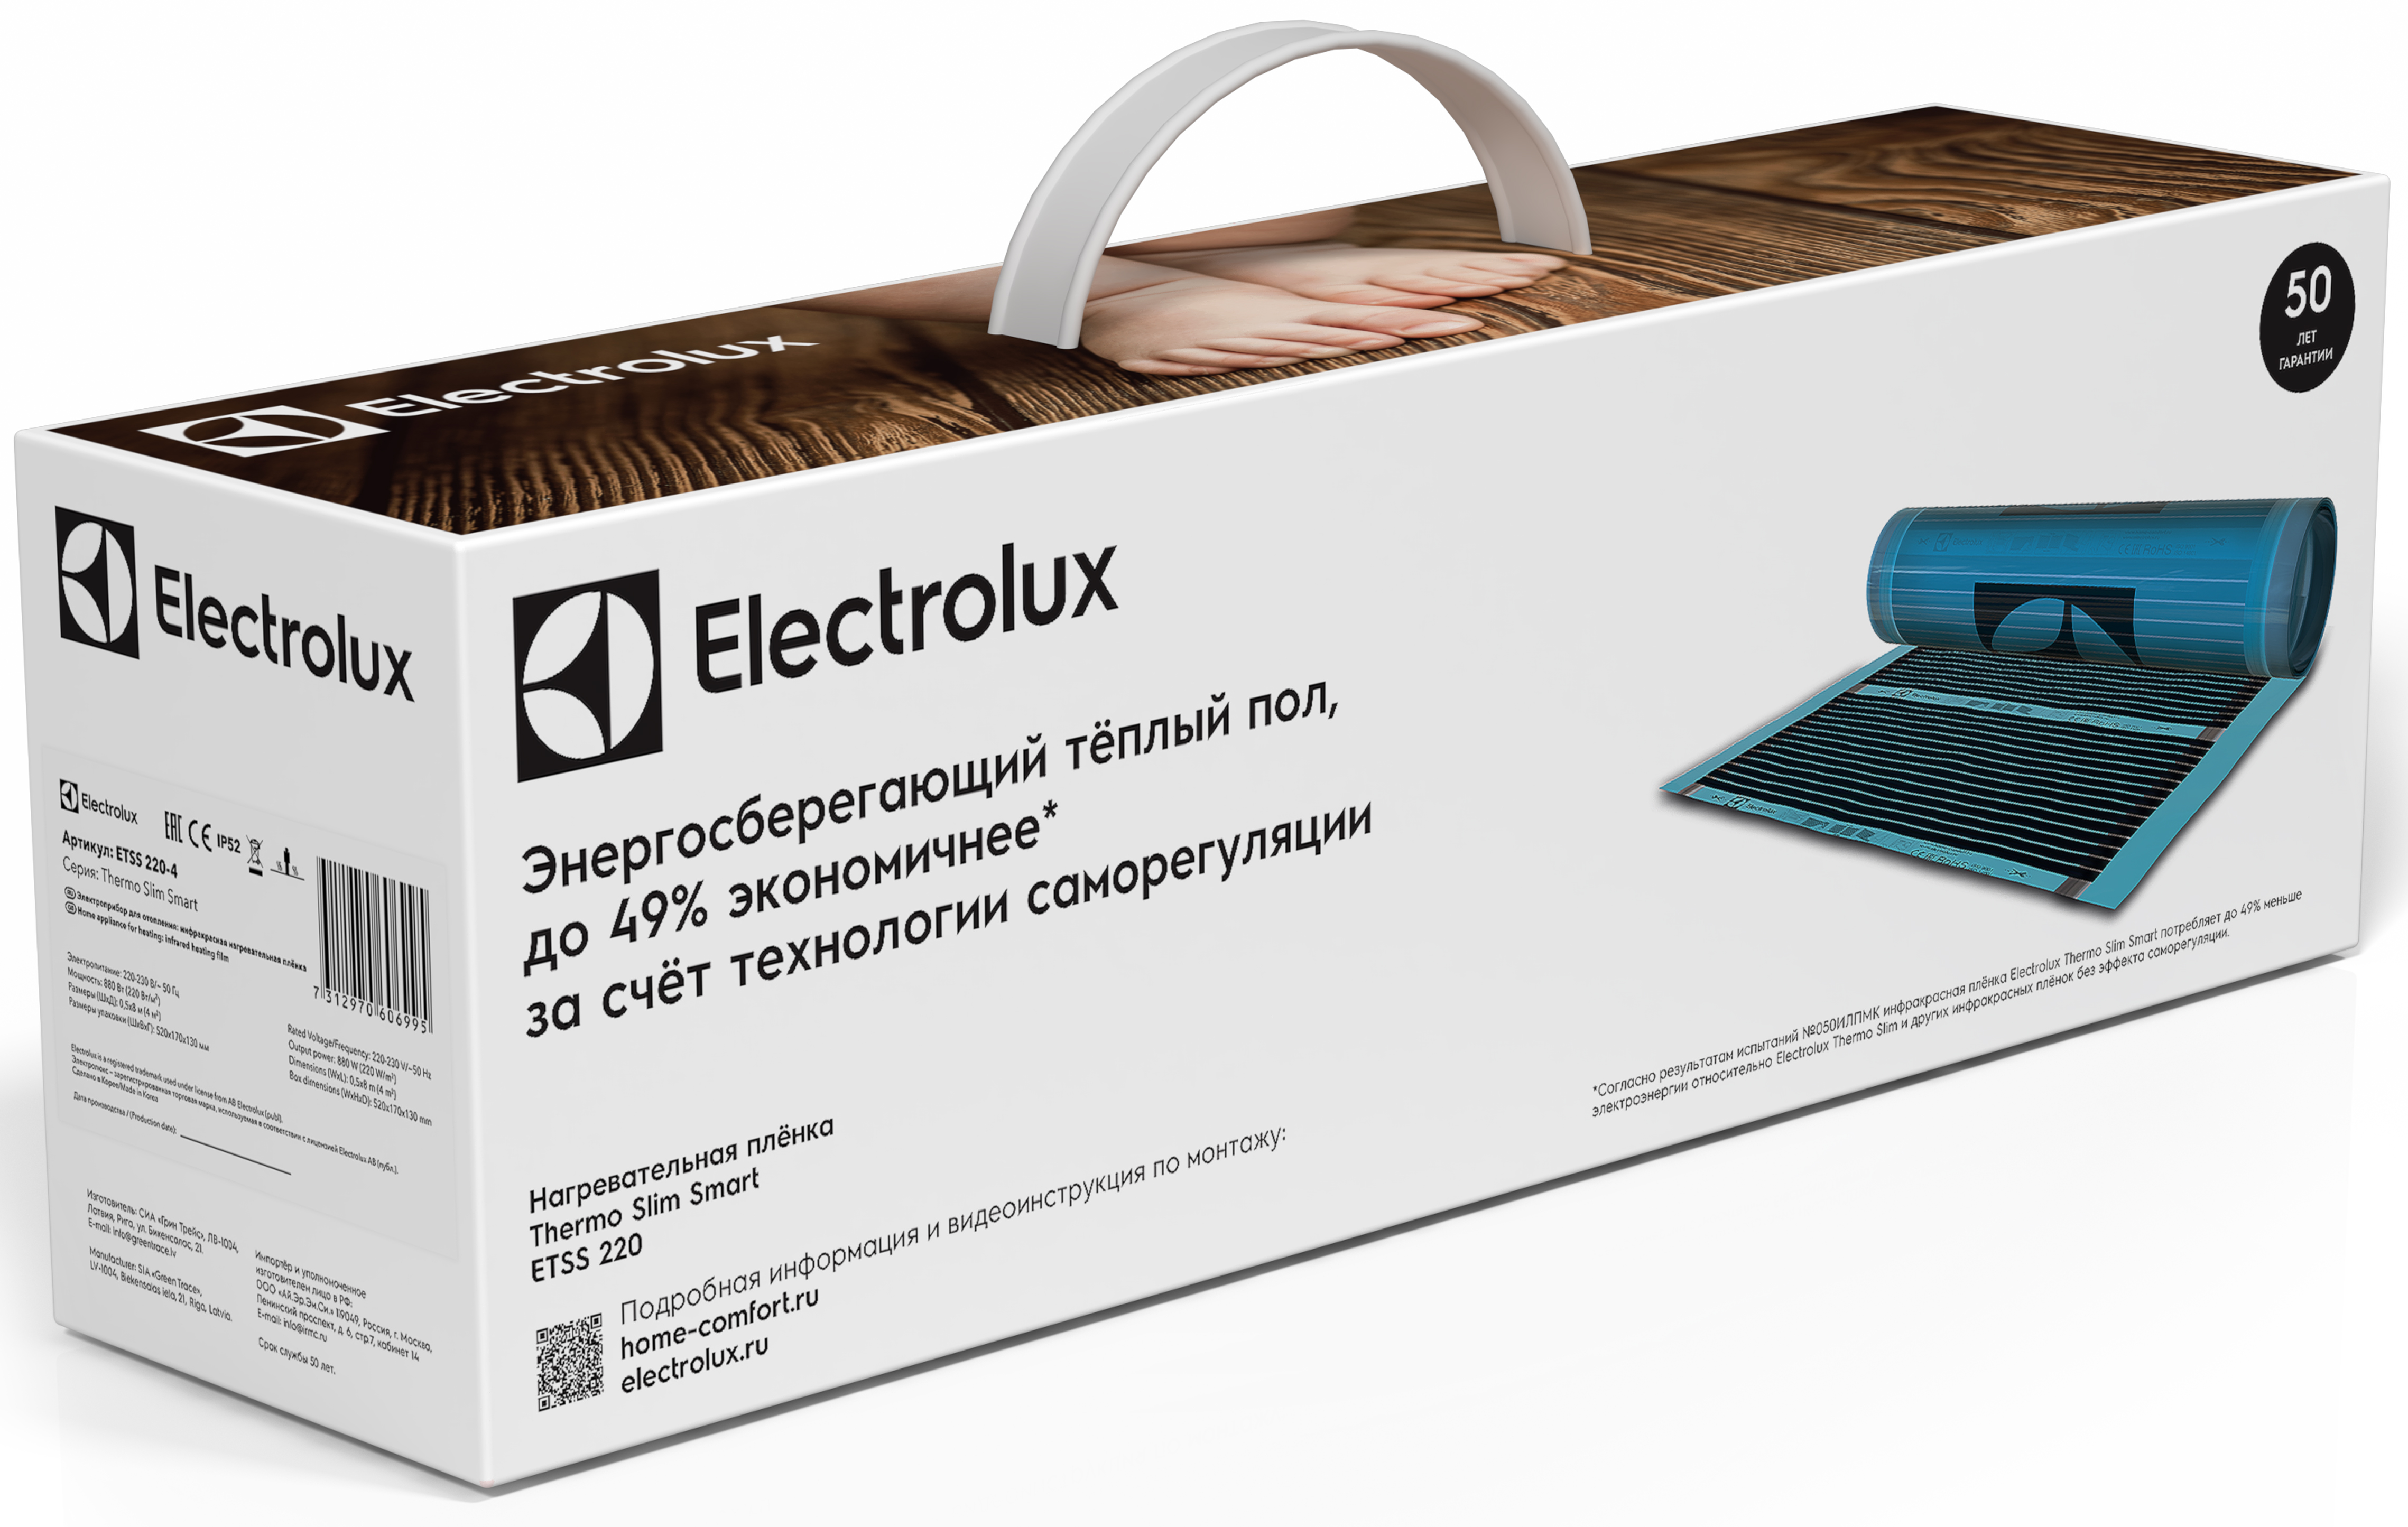 Теплый пол Electrolux под паркет Electrolux Thermo Slim Smart ETSS 220-4